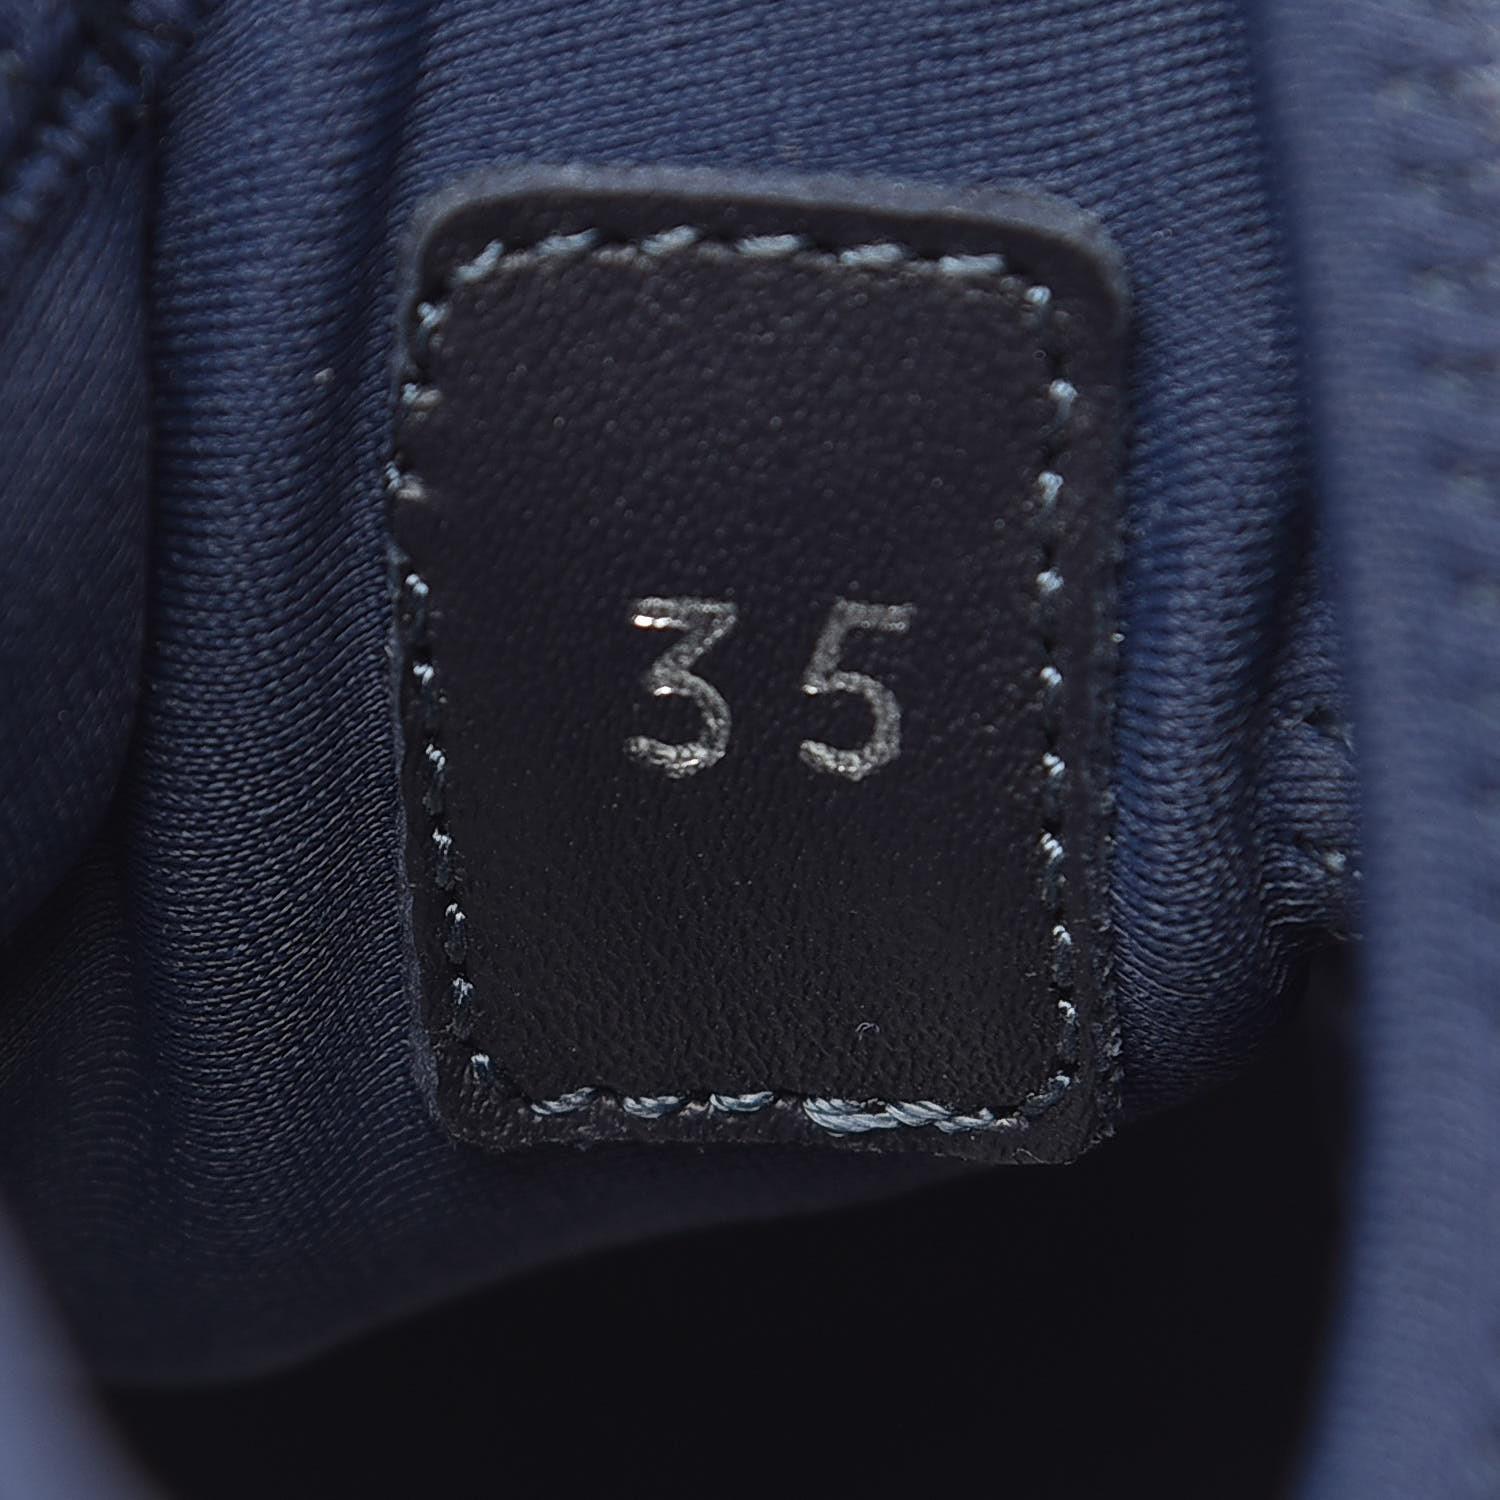 Louis Vuitton Neoprene Mesh Mens Fastlane Sneakers 35 Marine in Blue for Men - Lyst